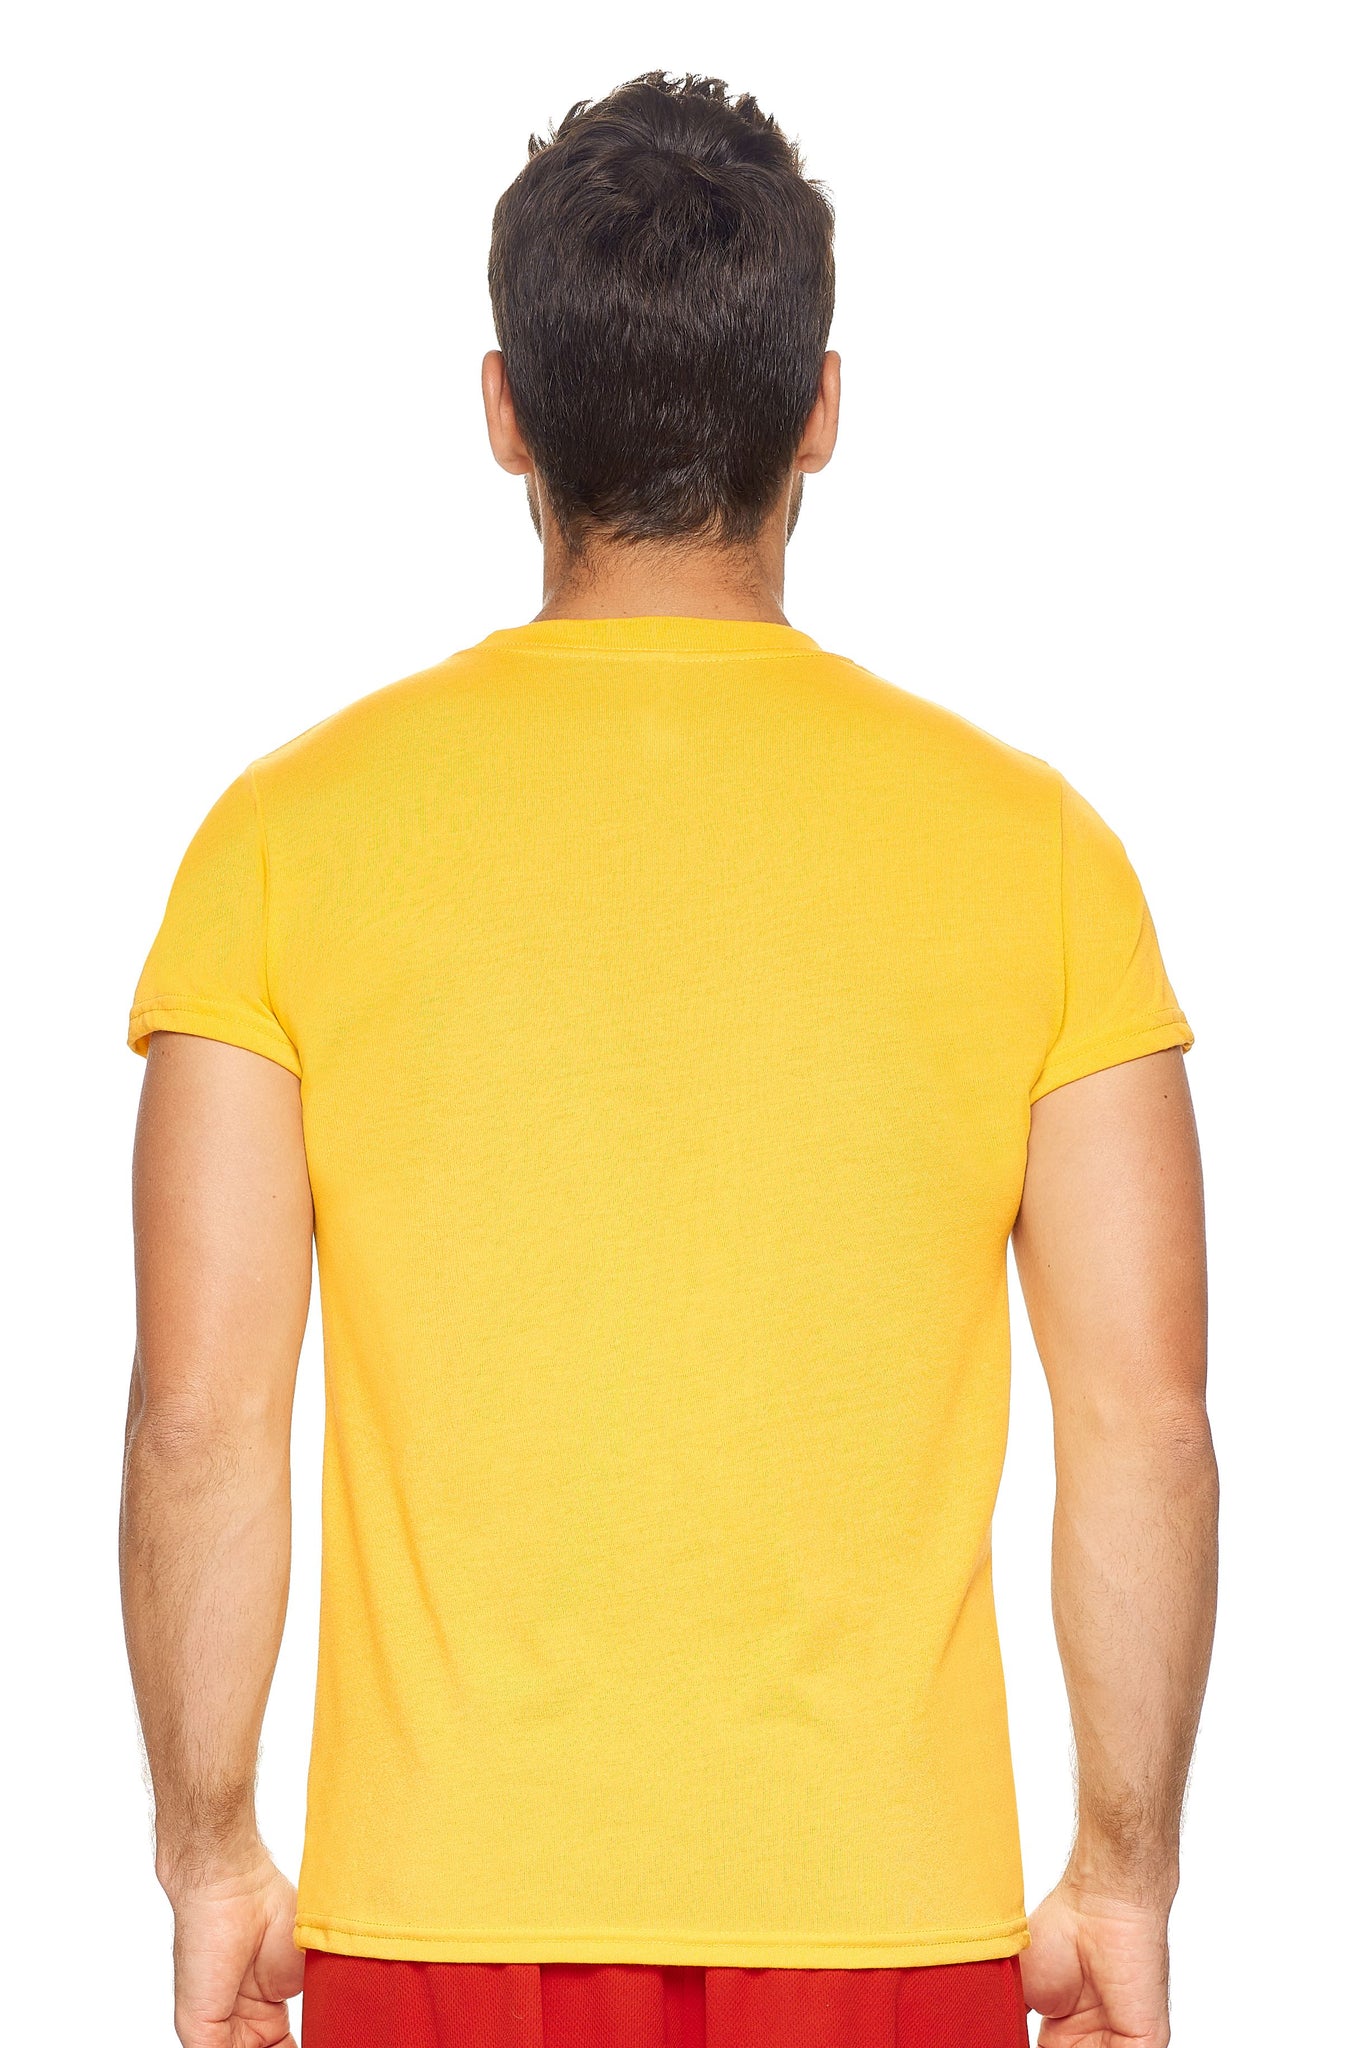 PT808🇺🇸 In The Field T-Shirt - Expert Brand#yellow